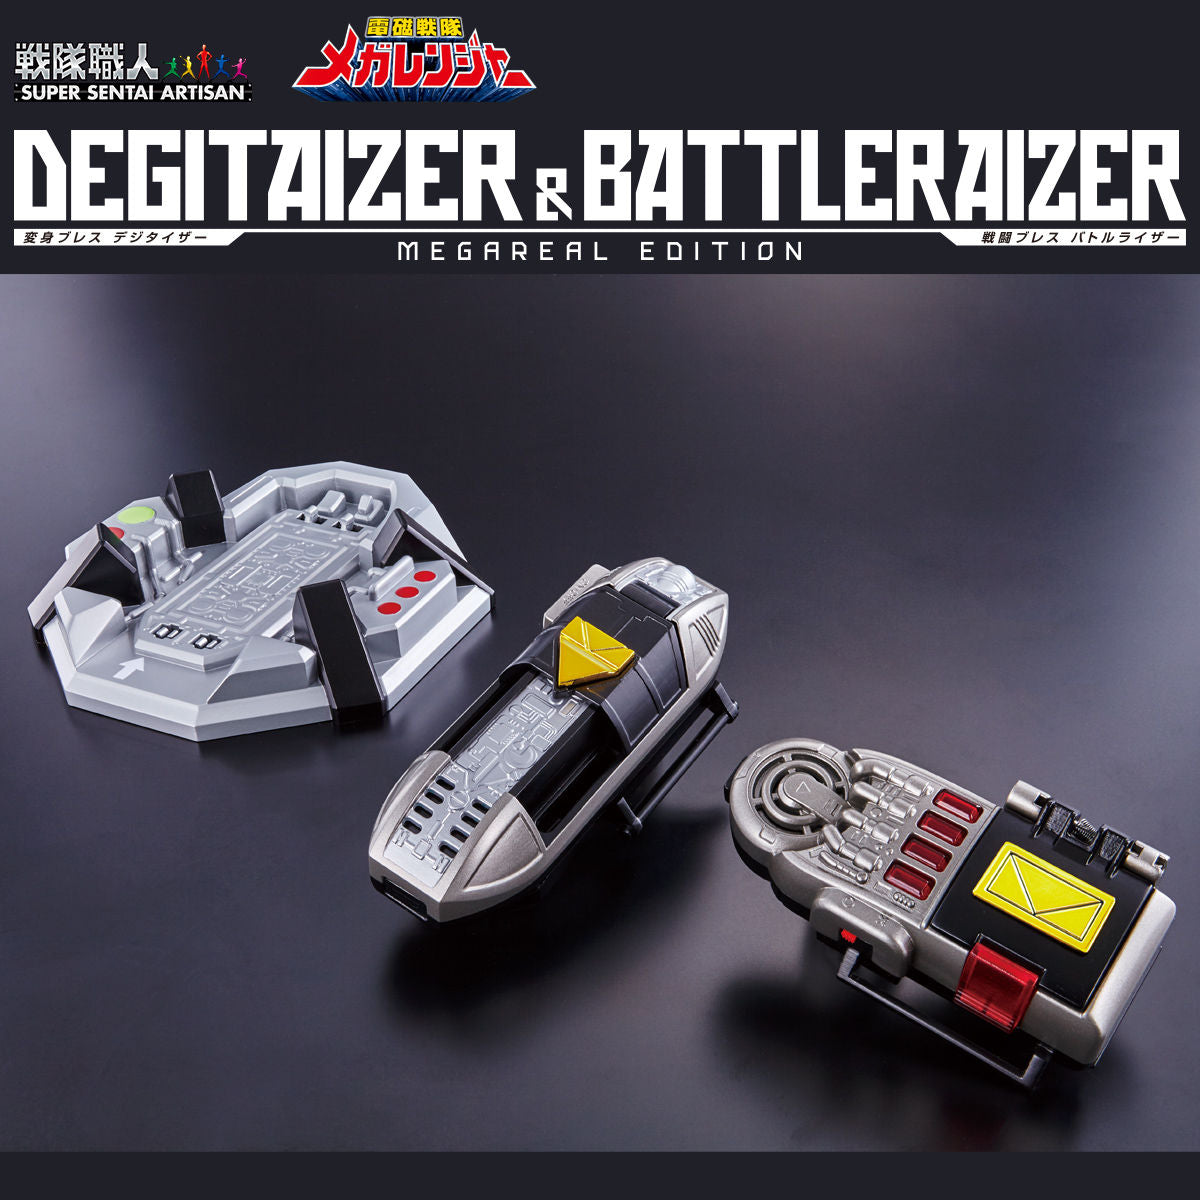 Artisan Megaranger Degitaizer & Battleraizer Megareal Edition